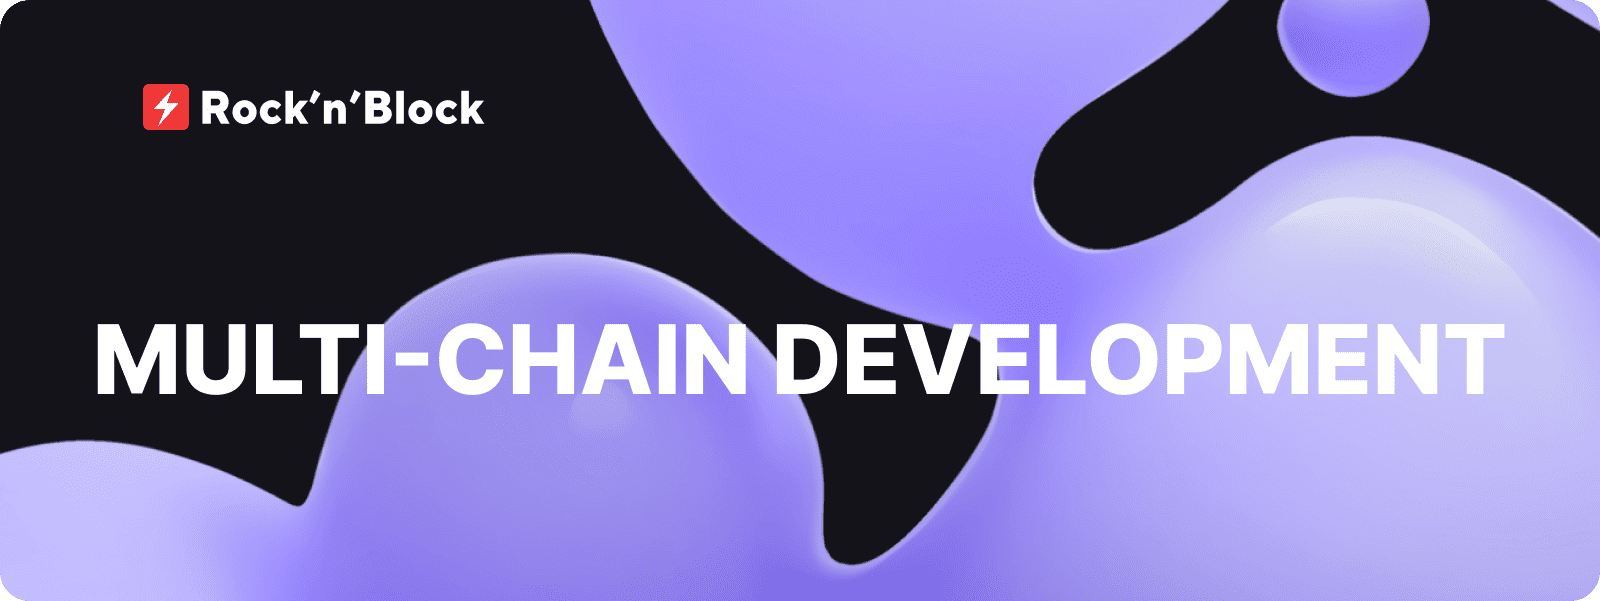 What Is Multi-Chain Development?